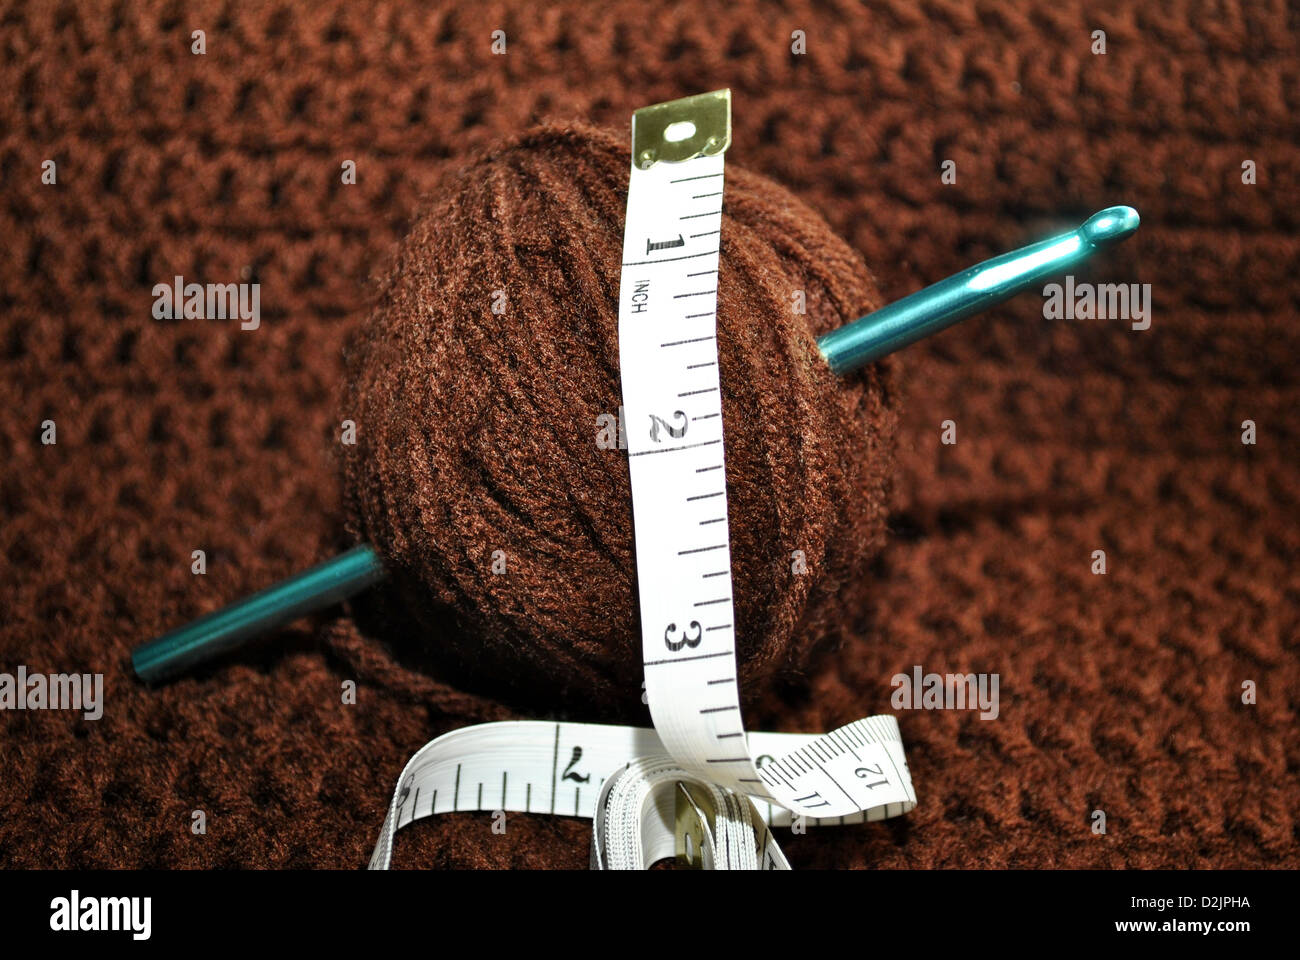 Measuring A Ball of Yarn Stock Photo